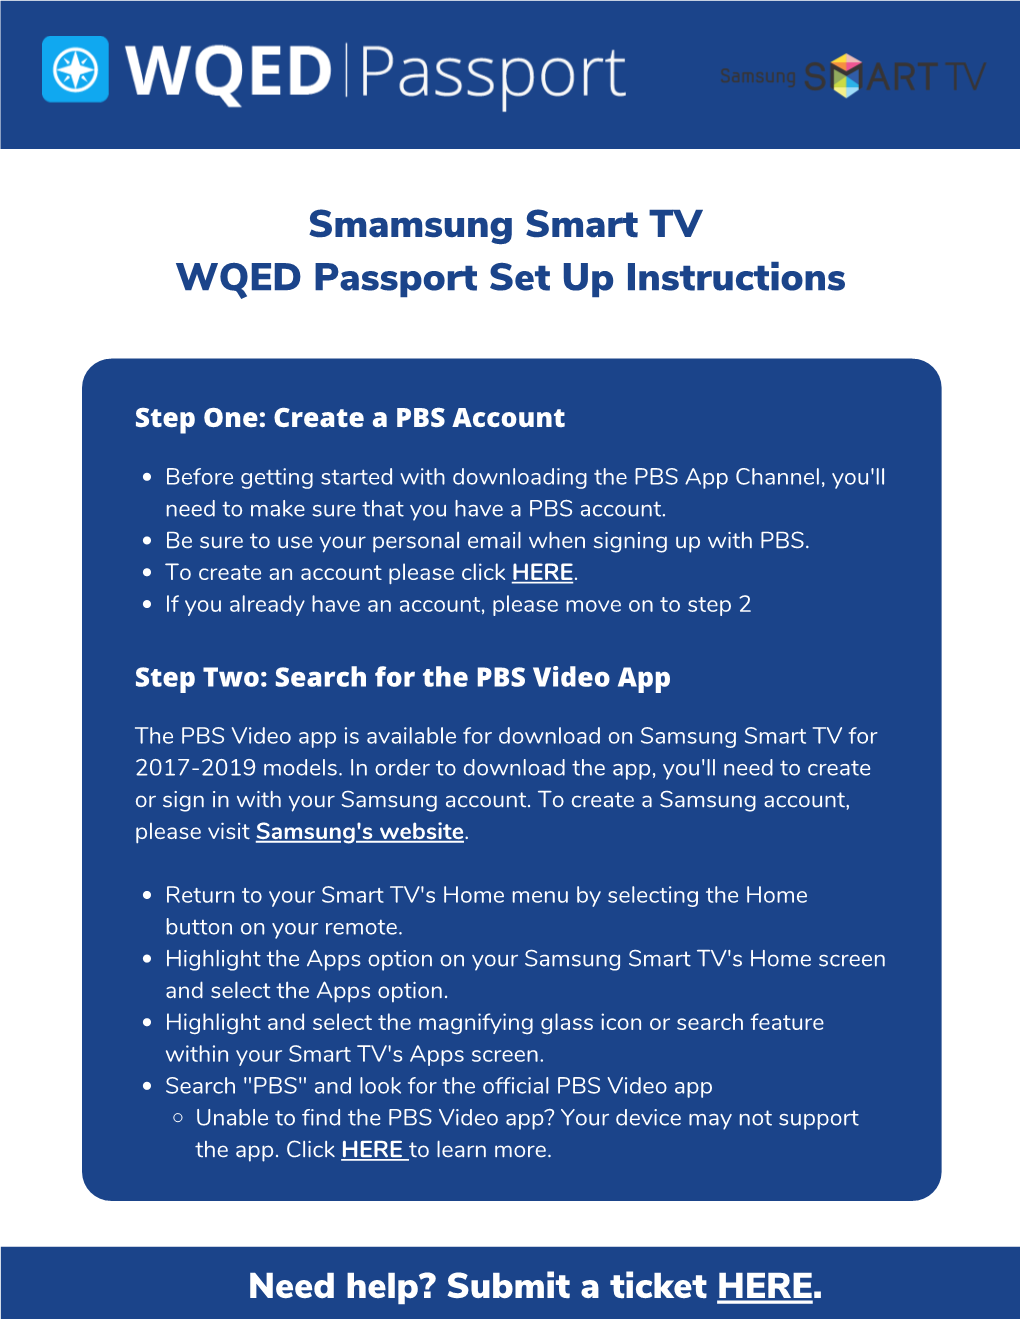 Samsung Smart TV WQED Passport Set up Instructions